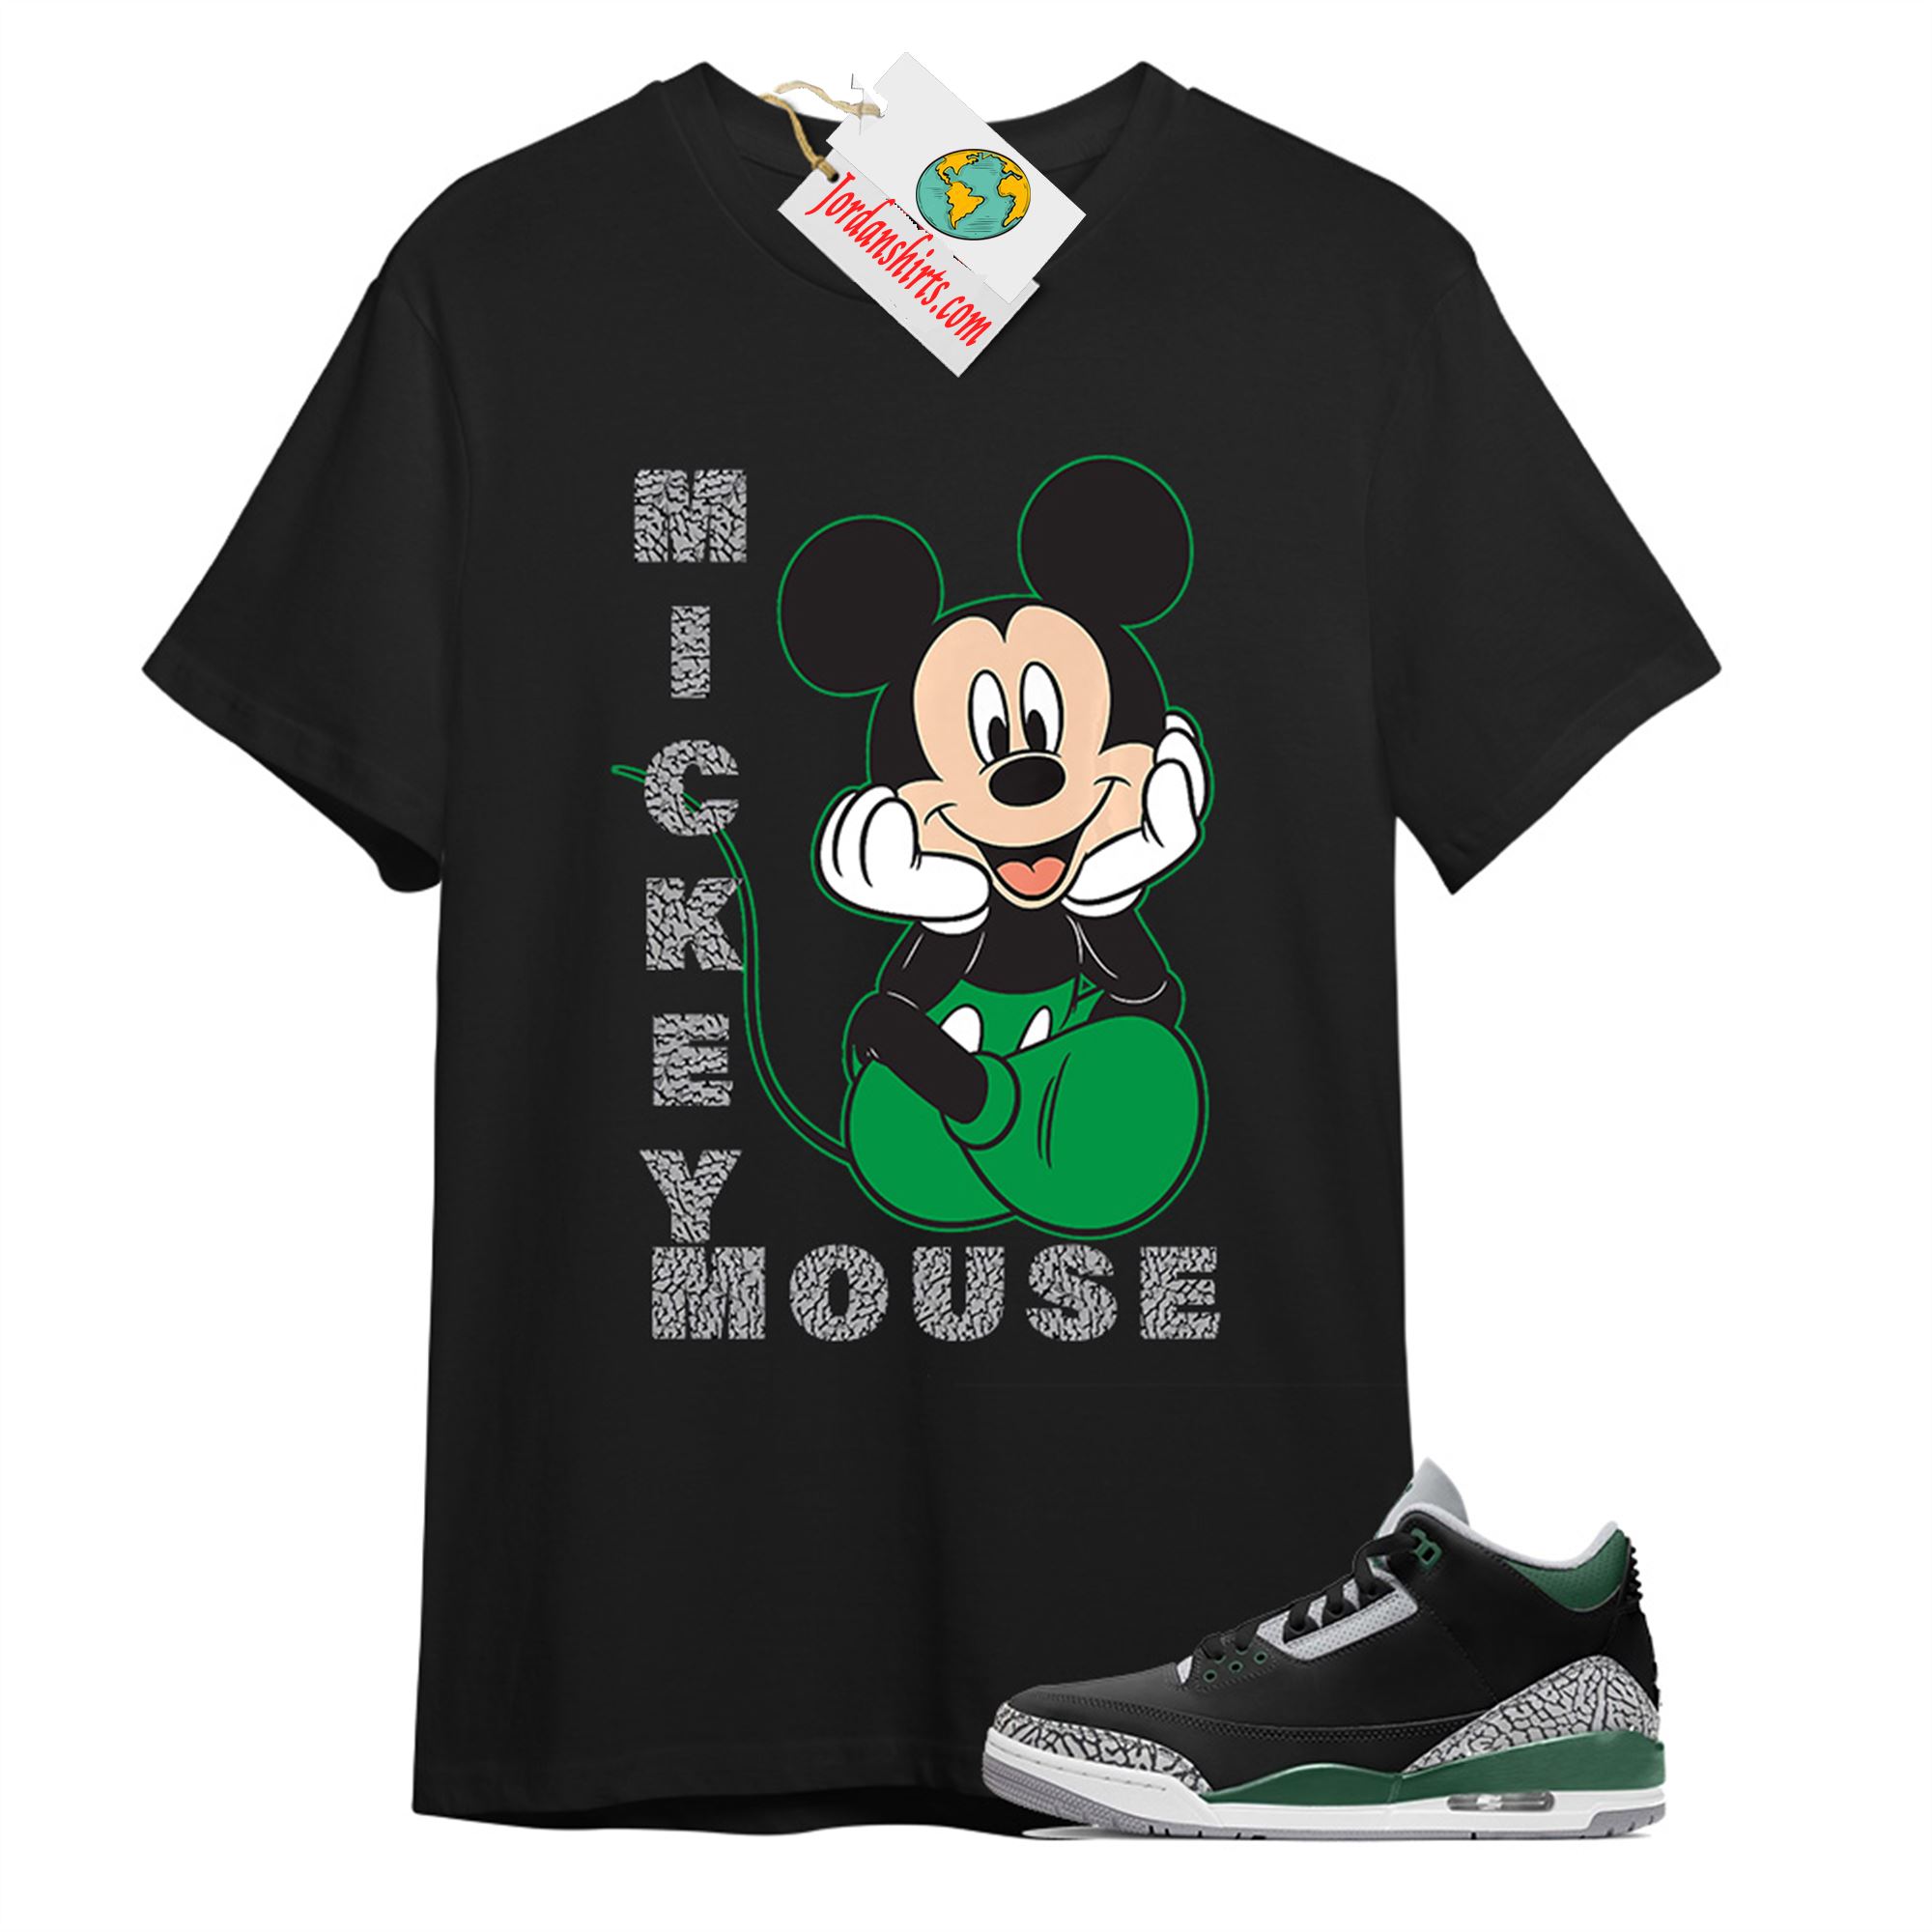 Jordan 3 Shirt, Disney Mickey Mouse Hands In Face Black T-shirt Air Jordan 3 Pine Green 3s Size Up To 5xl